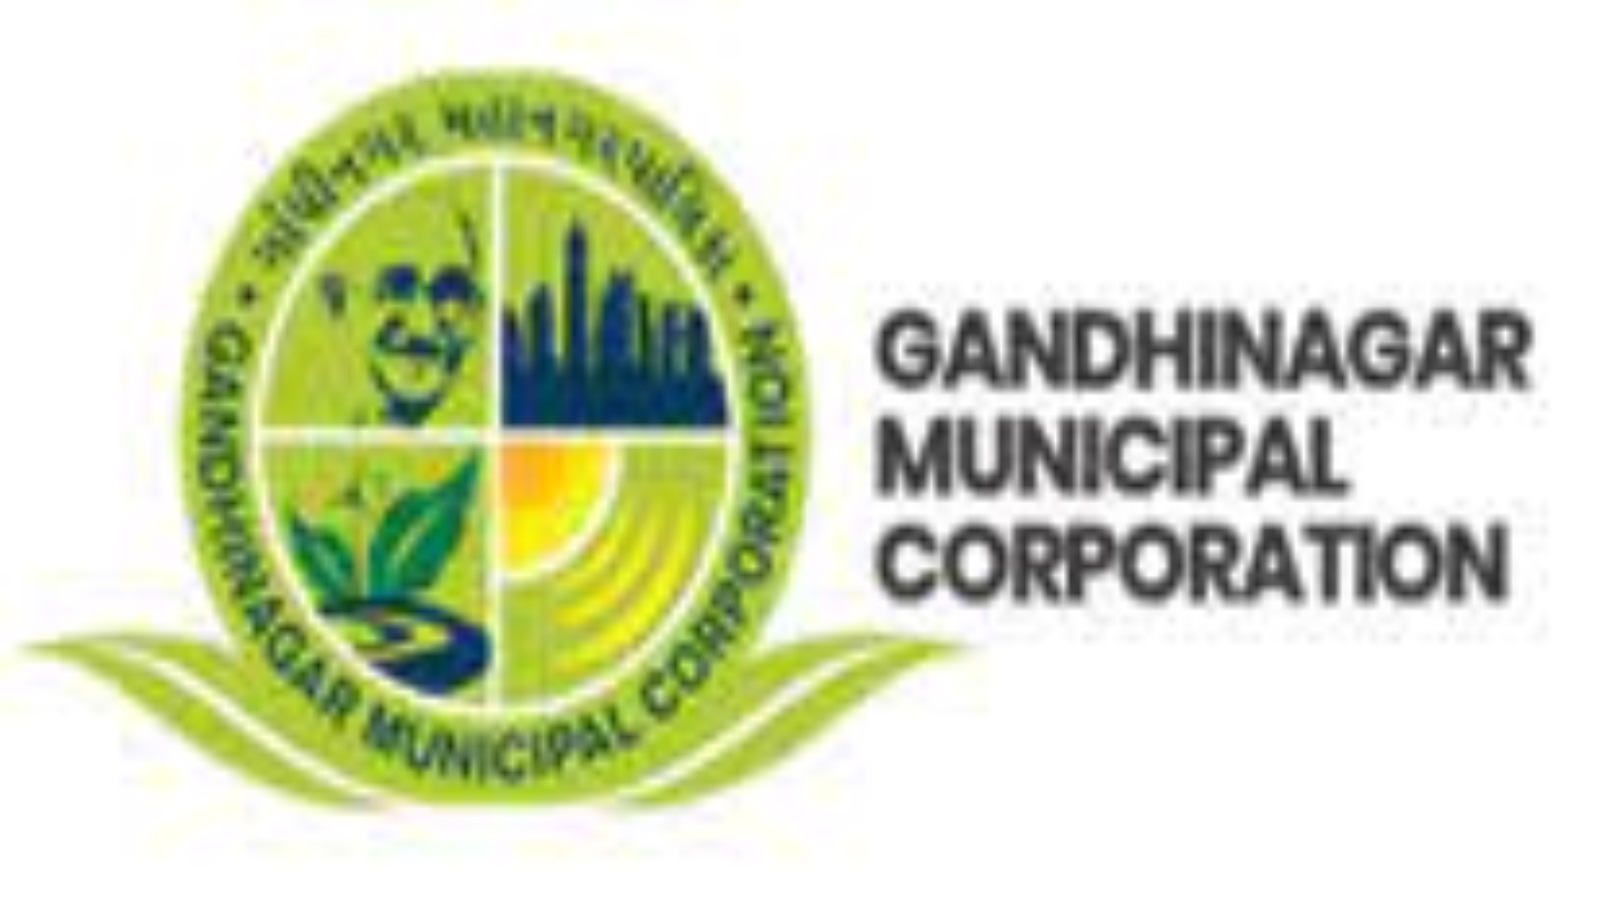 Gandhinagar Municipal Corporation